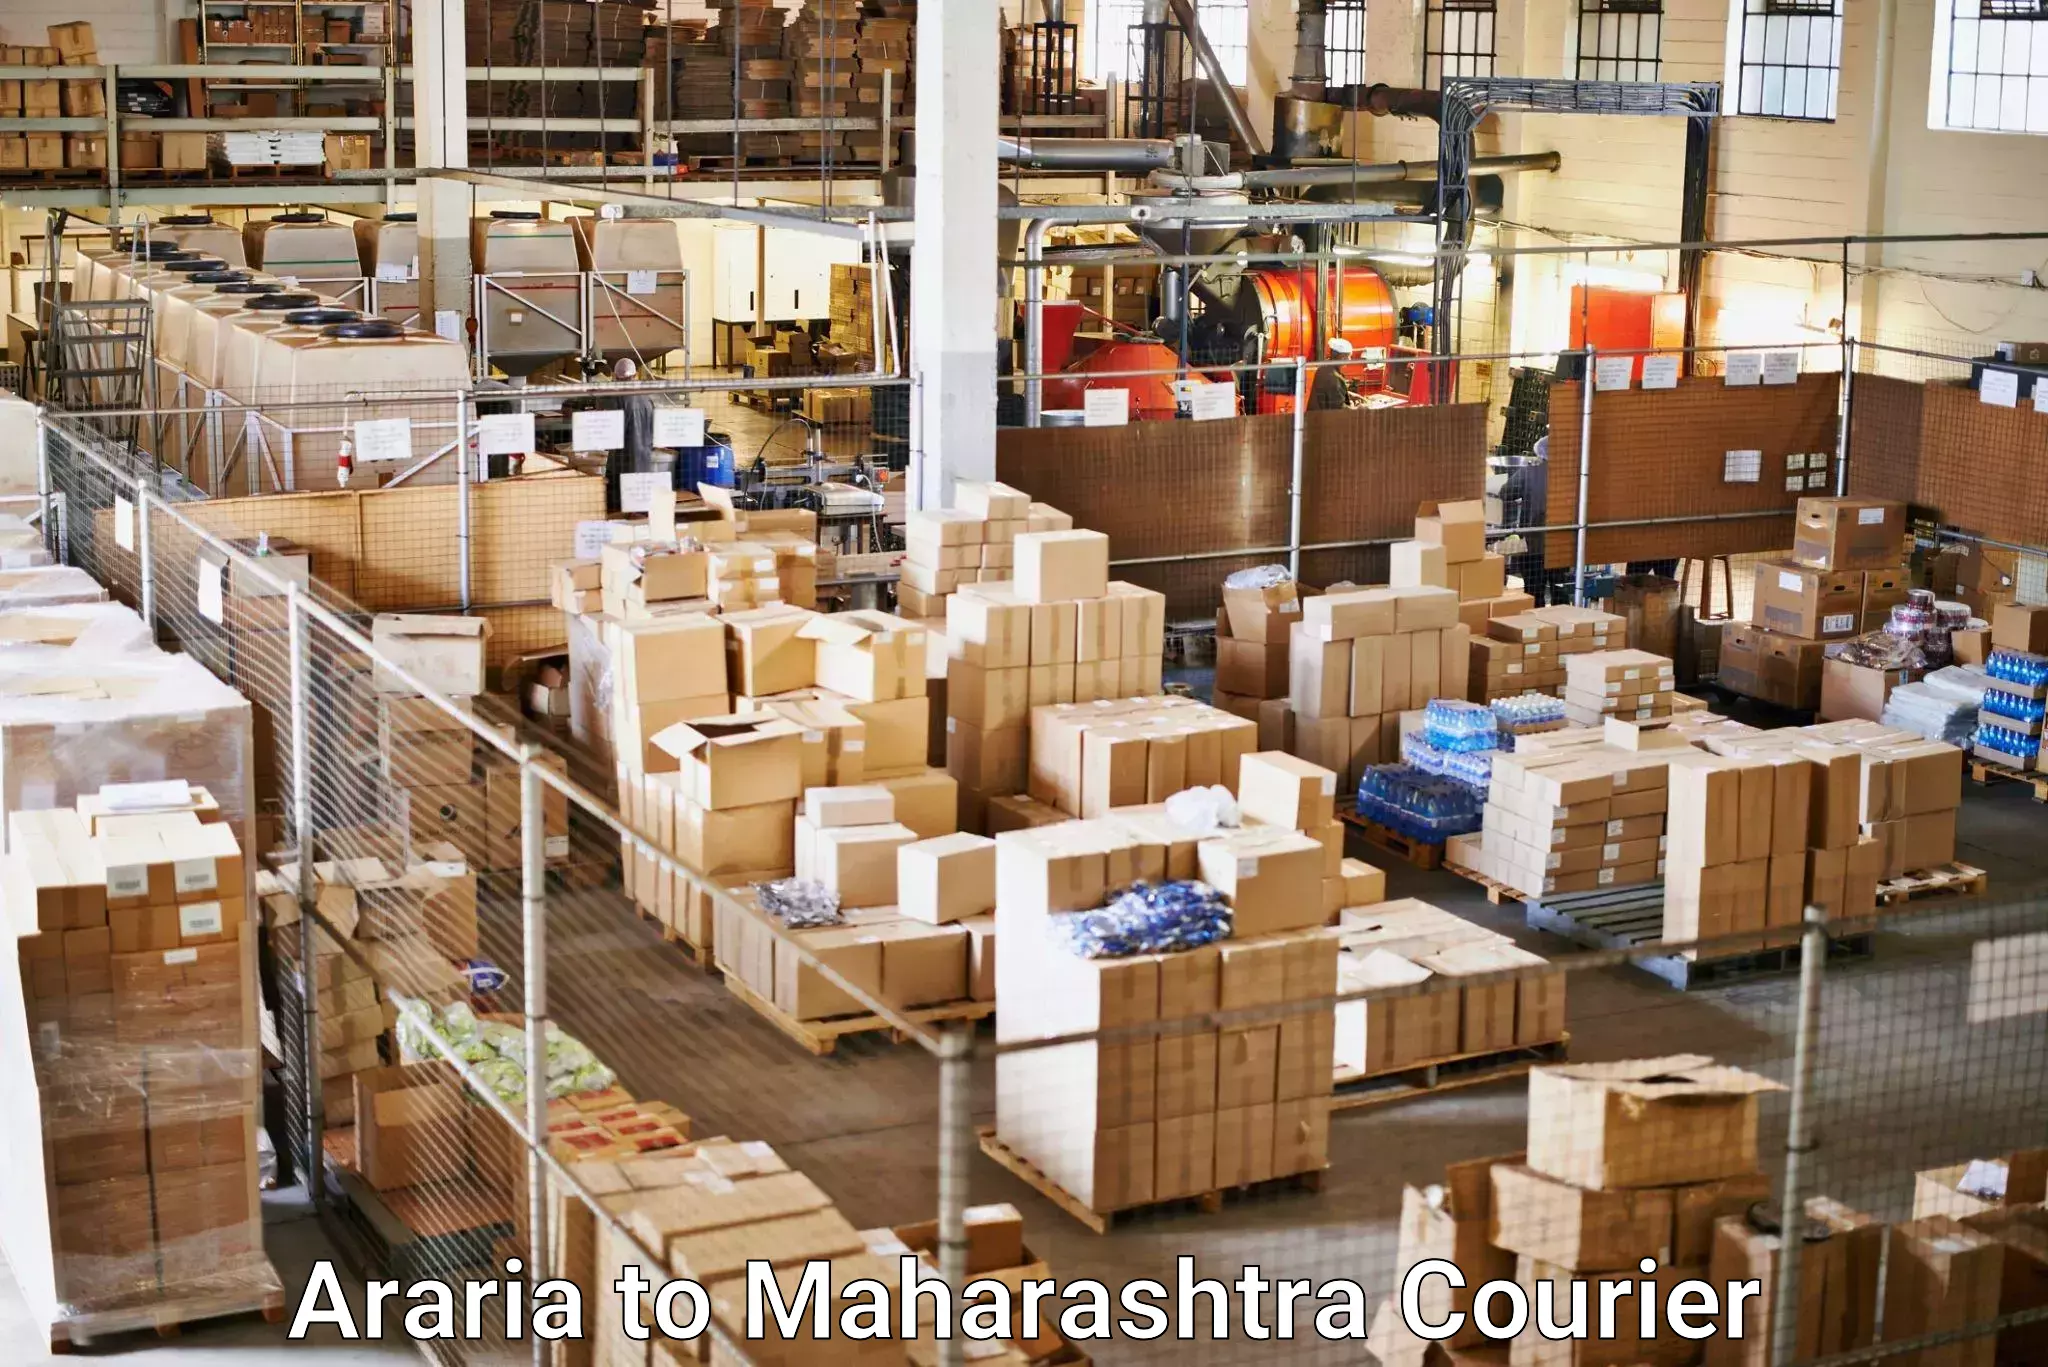 Customized shipping options Araria to Tata Institute of Social Sciences Mumbai